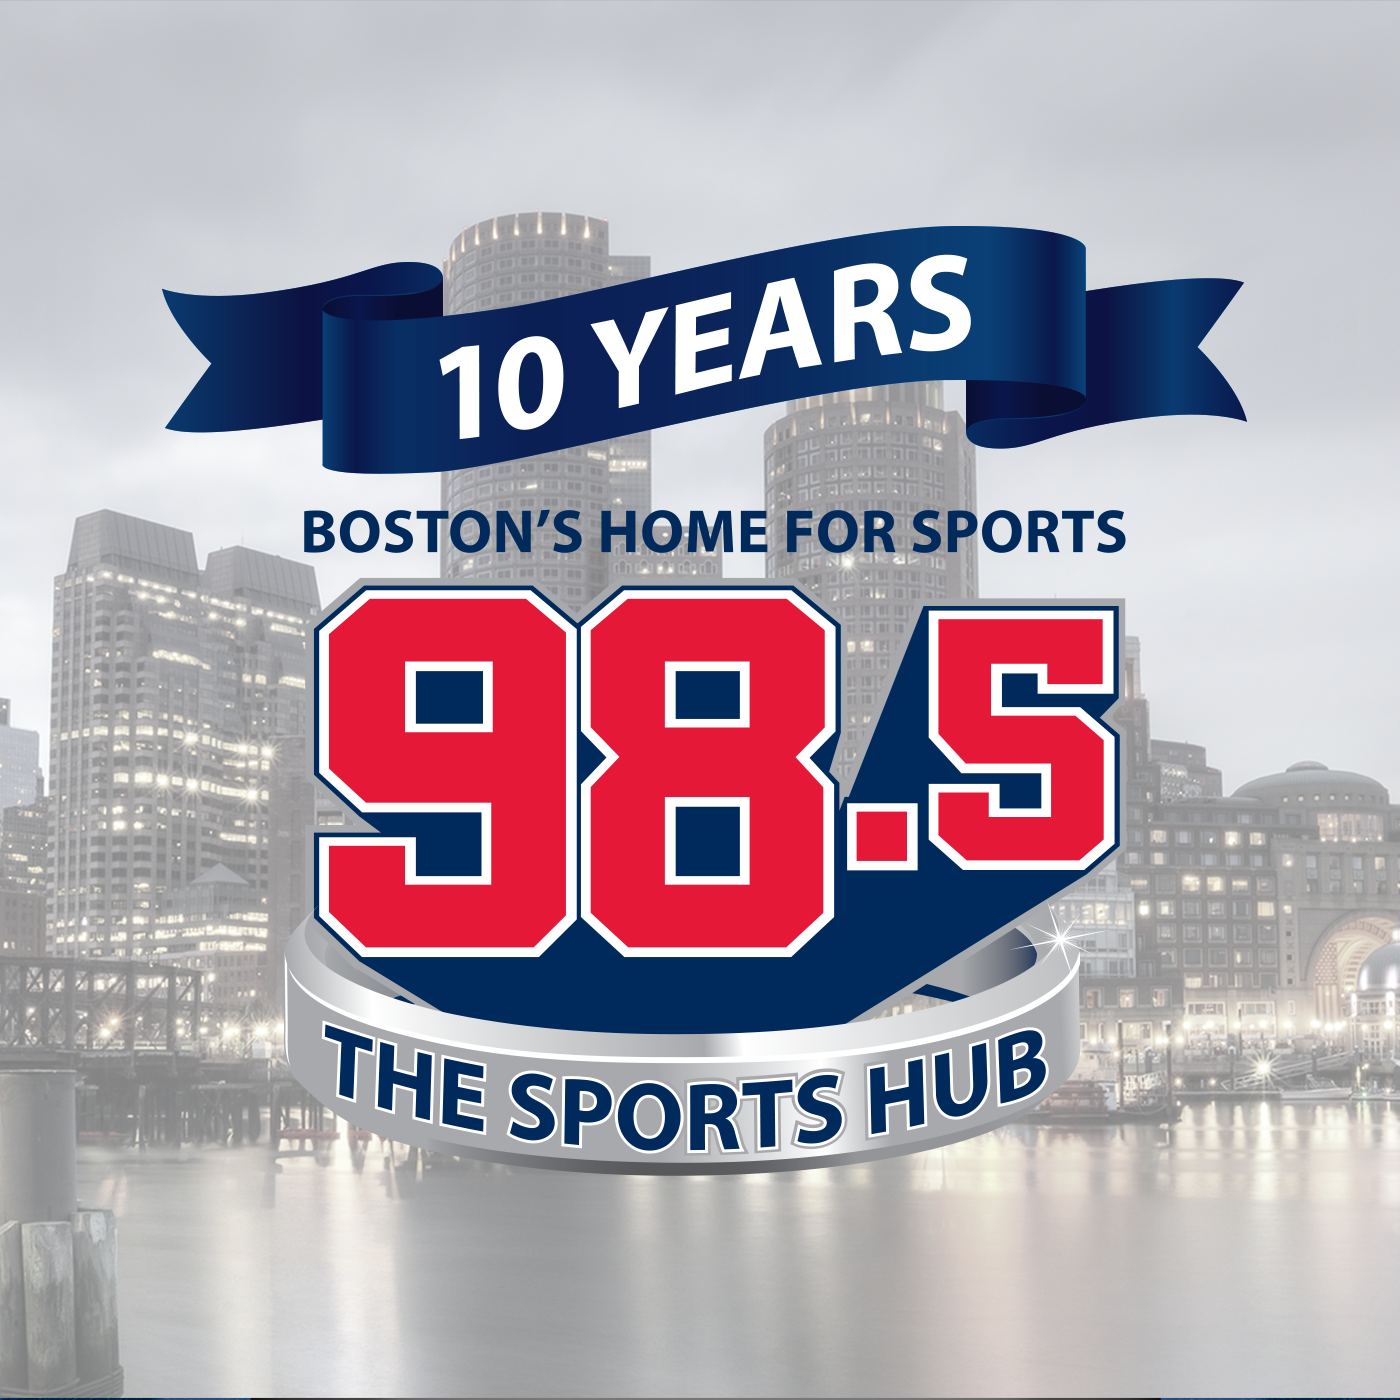 98.5 The Sports Hub 10th Anniversary Celebration